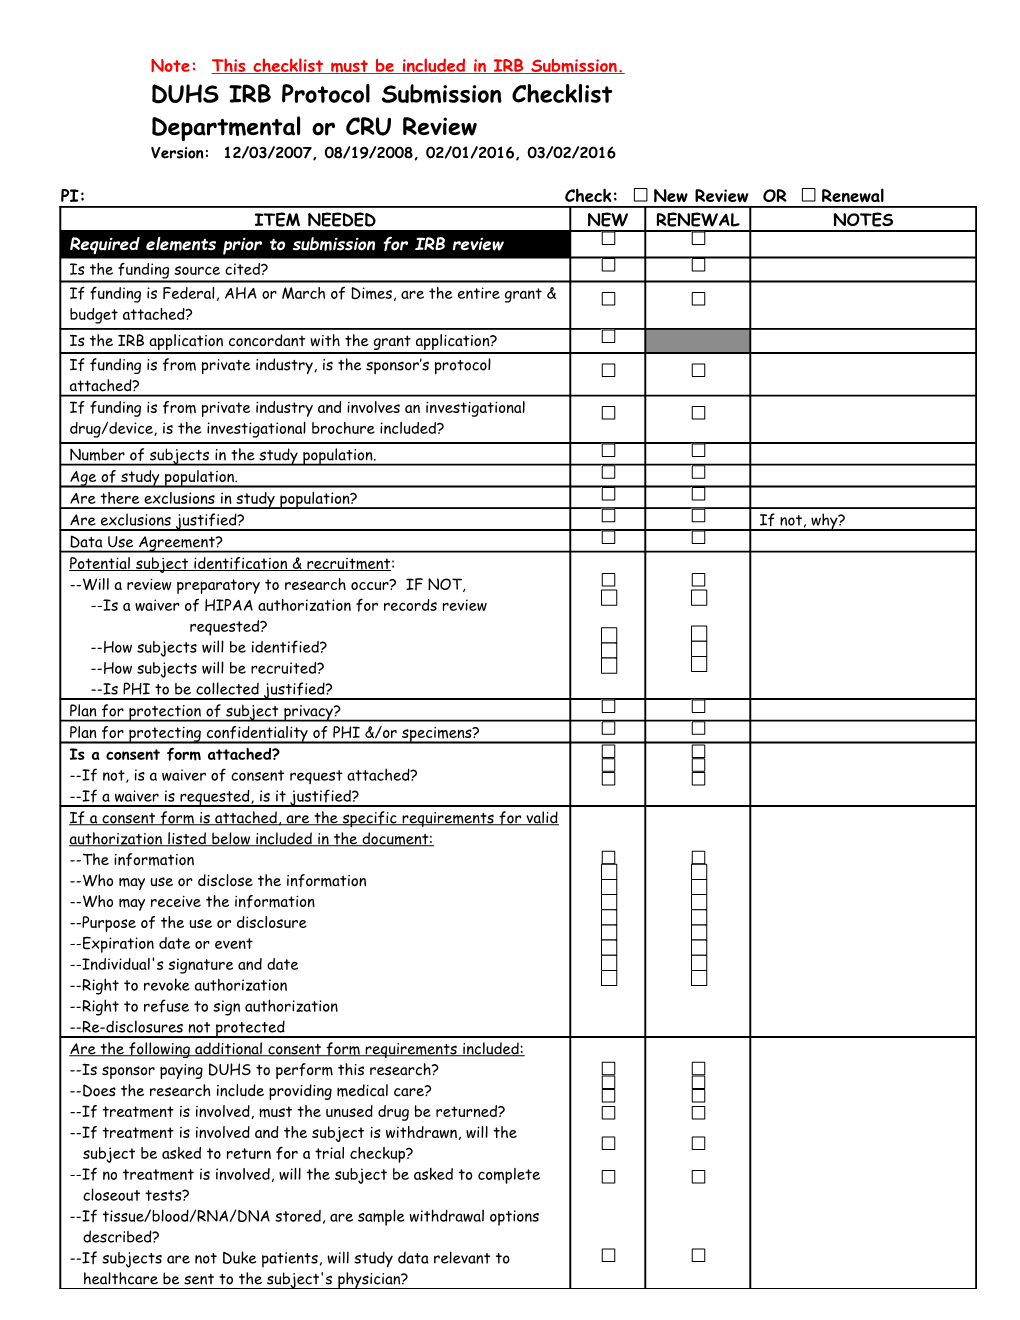 DUMC IRB Protocol Submission Checklist